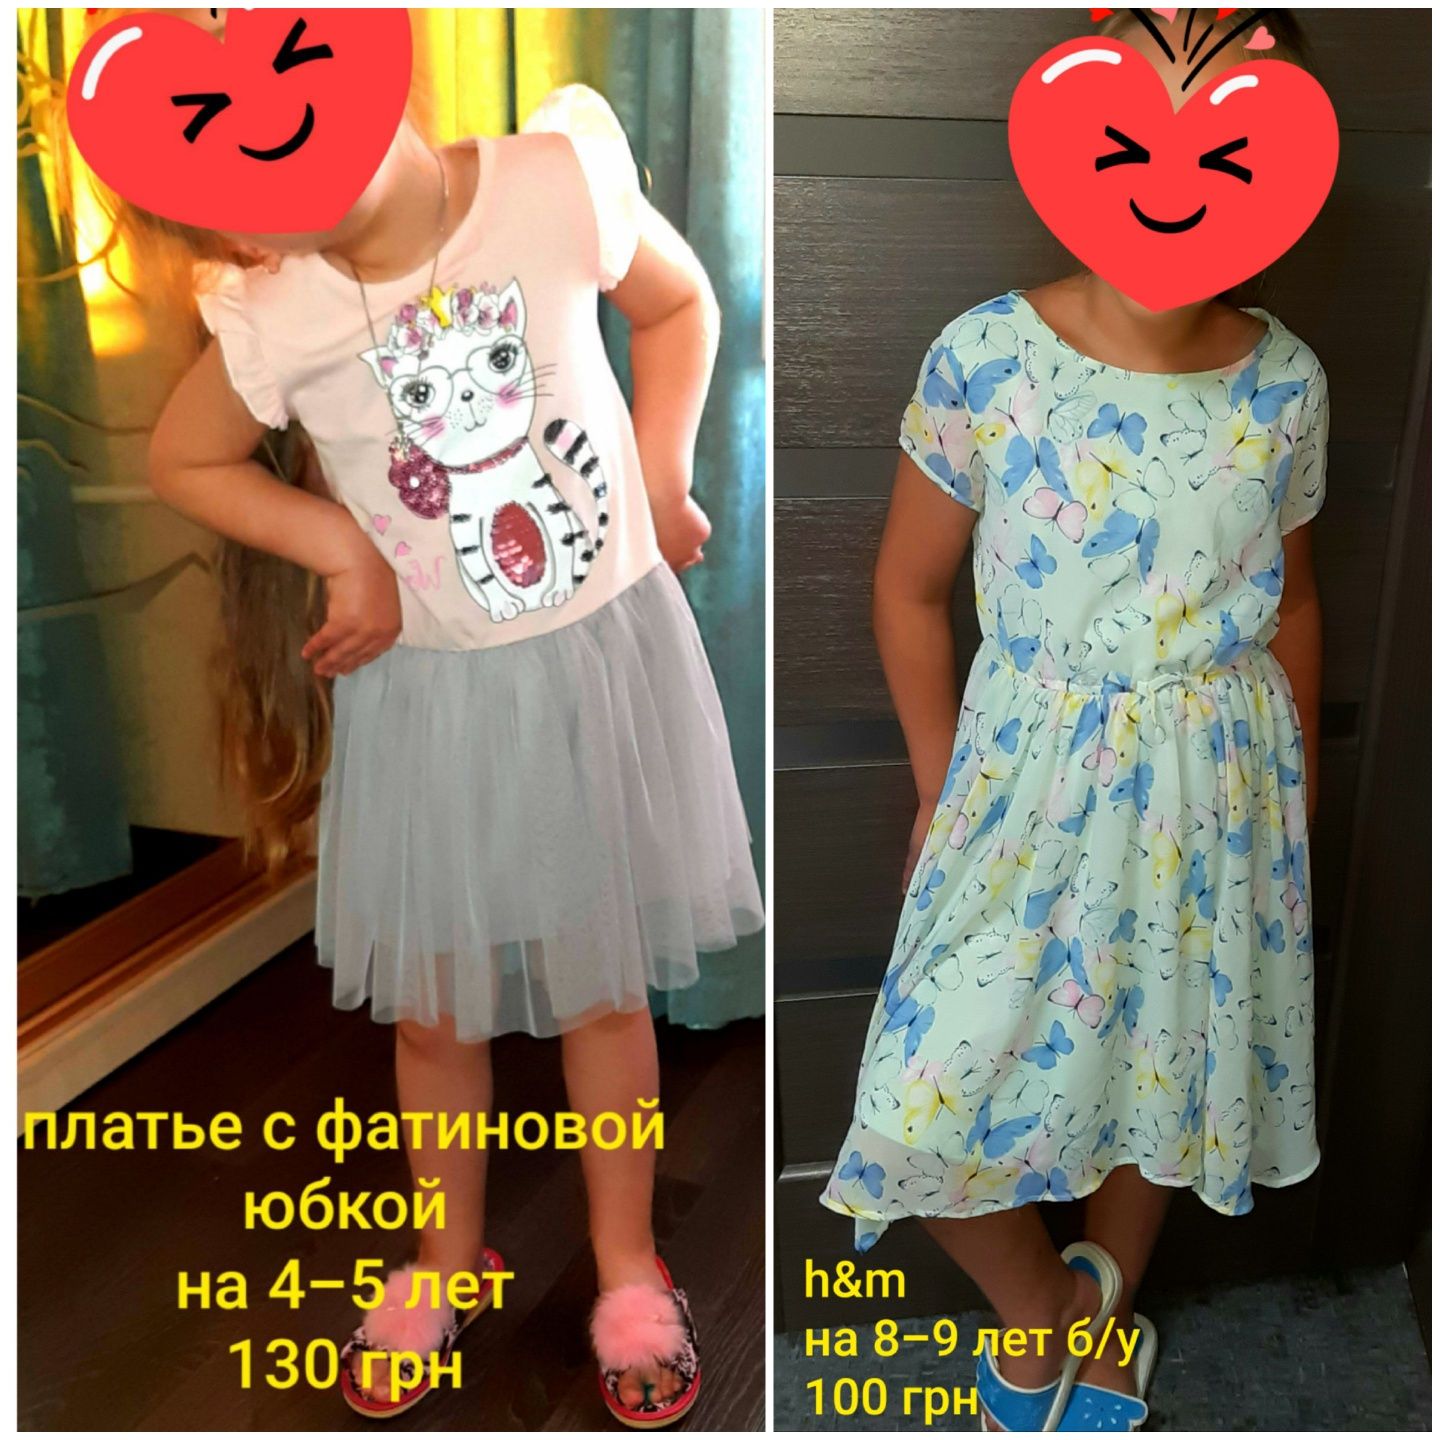 Одежда для девочки на лето